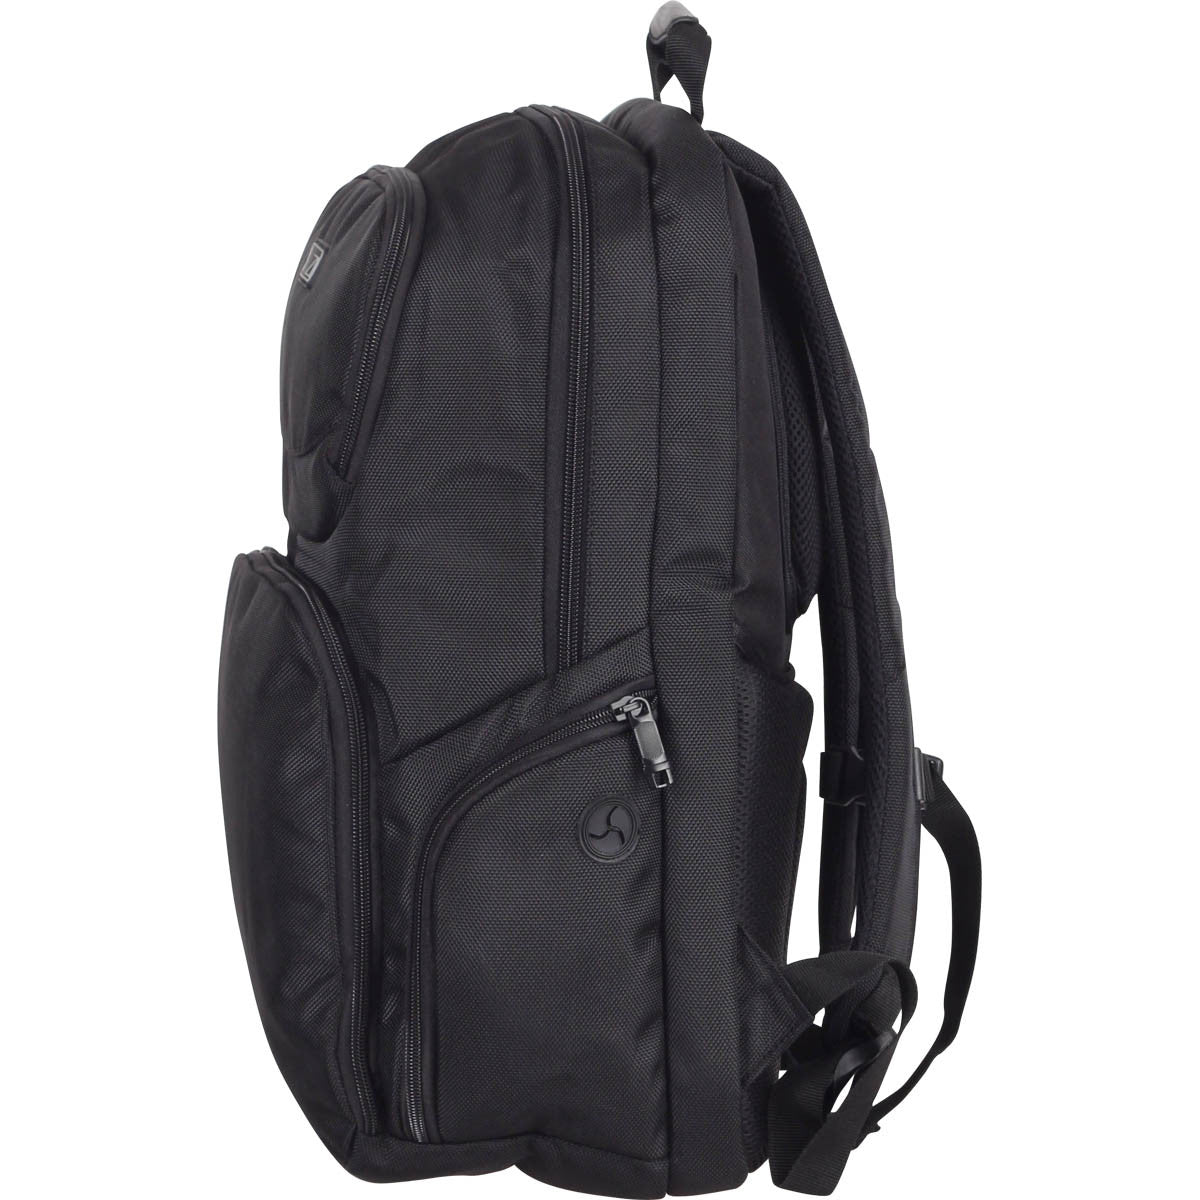 Laptop Bags, Cases, Sleeves|Tablet Bags|Leather Laptop Bags - Zoomlite